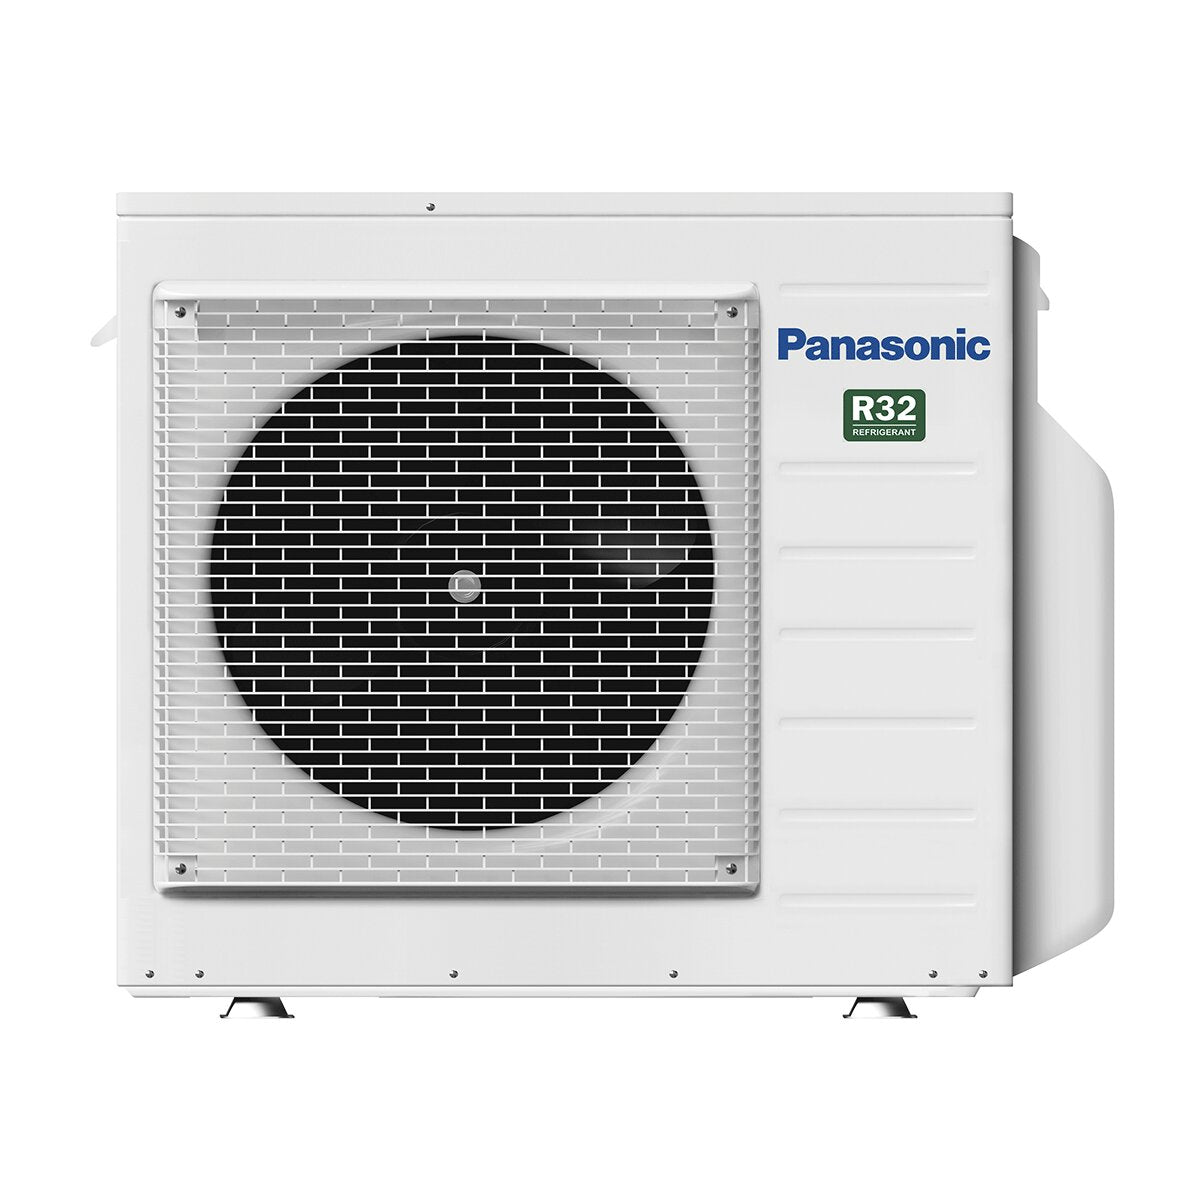 Panasonic TZ Series trial split air conditioner 9000+9000+9000 BTU A+++ wifi external unit 5.2 kW